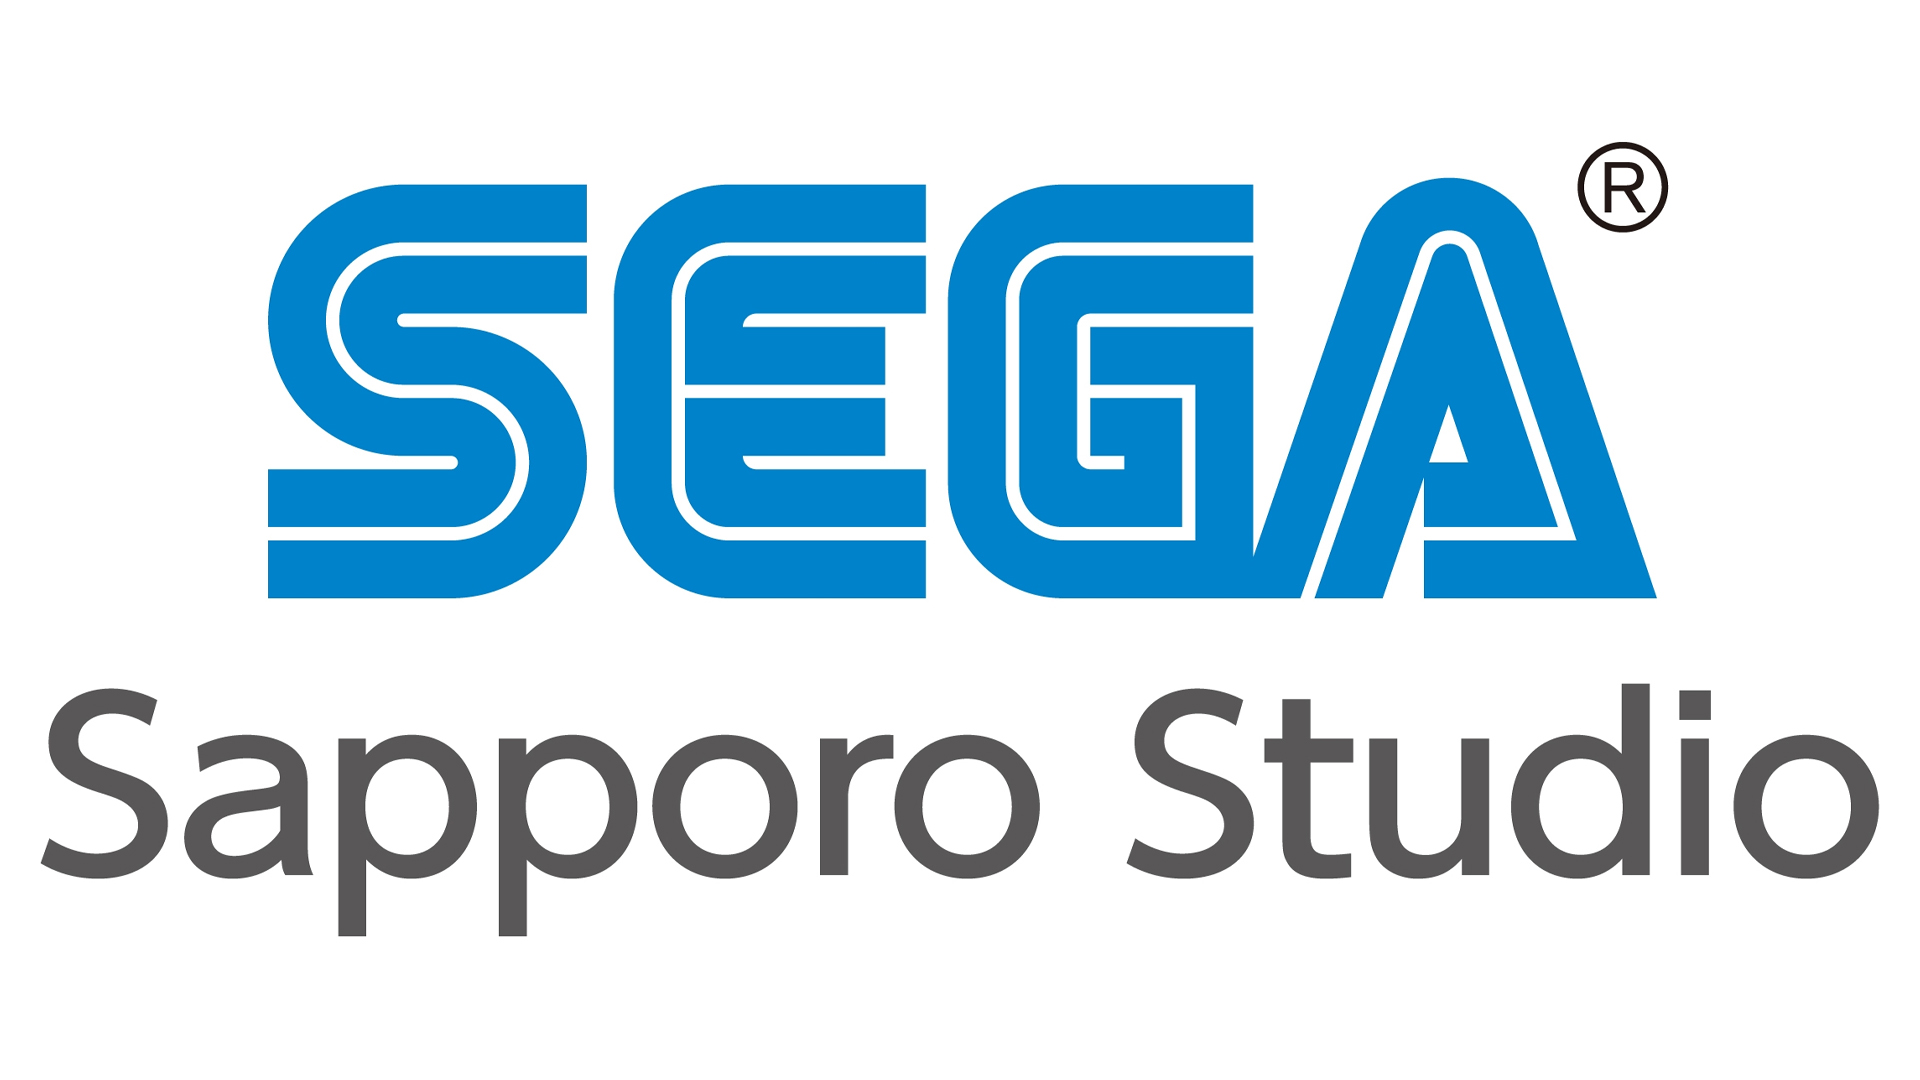 SEGA Sapporo Studio